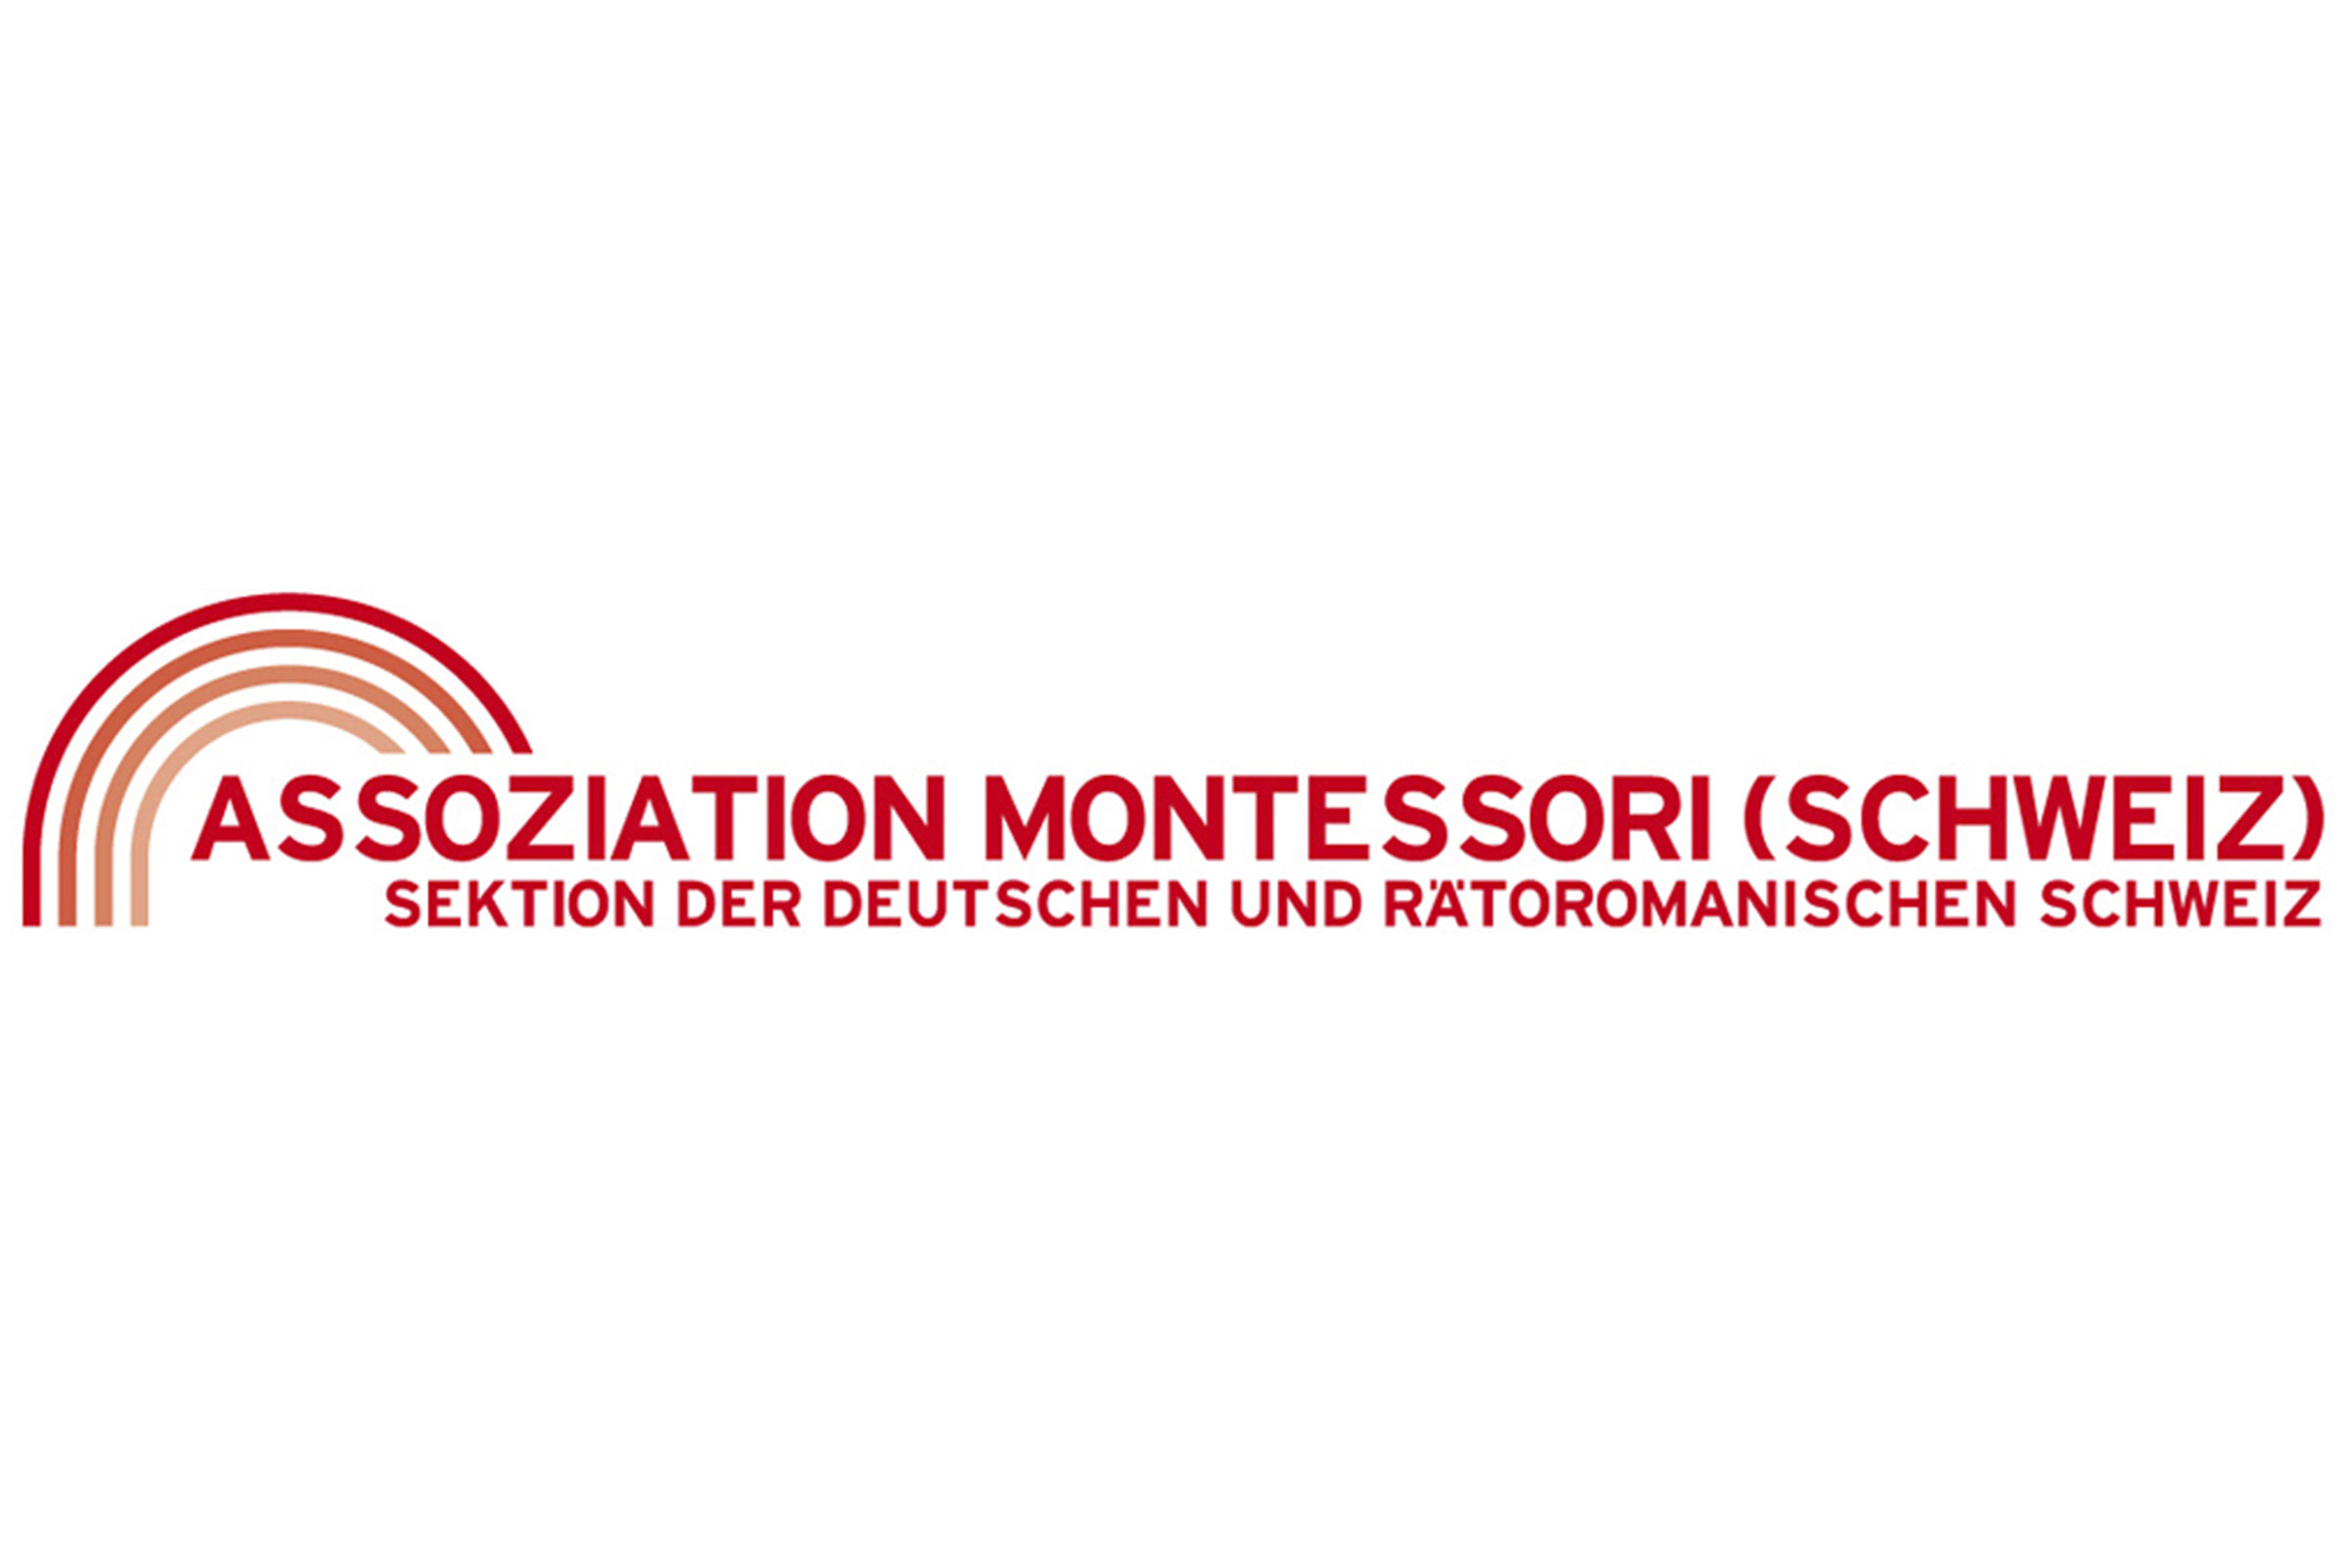 Assoziation Montessori (Schweiz) logo